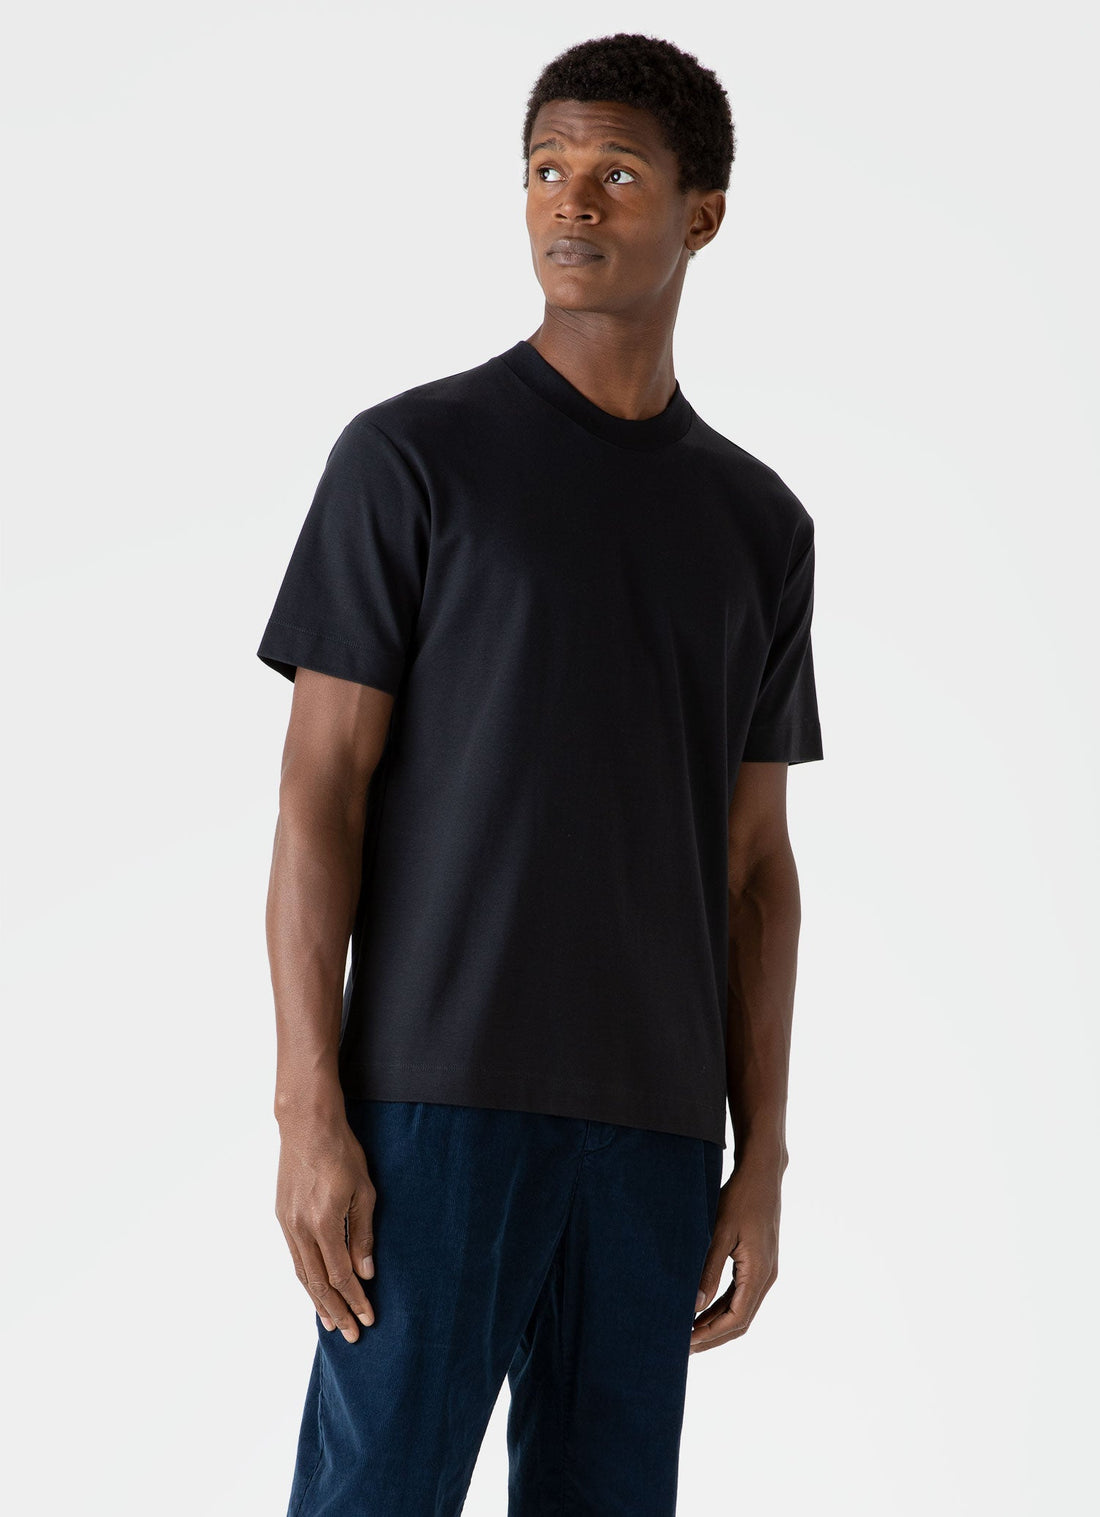 Men's Brushed Cotton T-shirt in Black